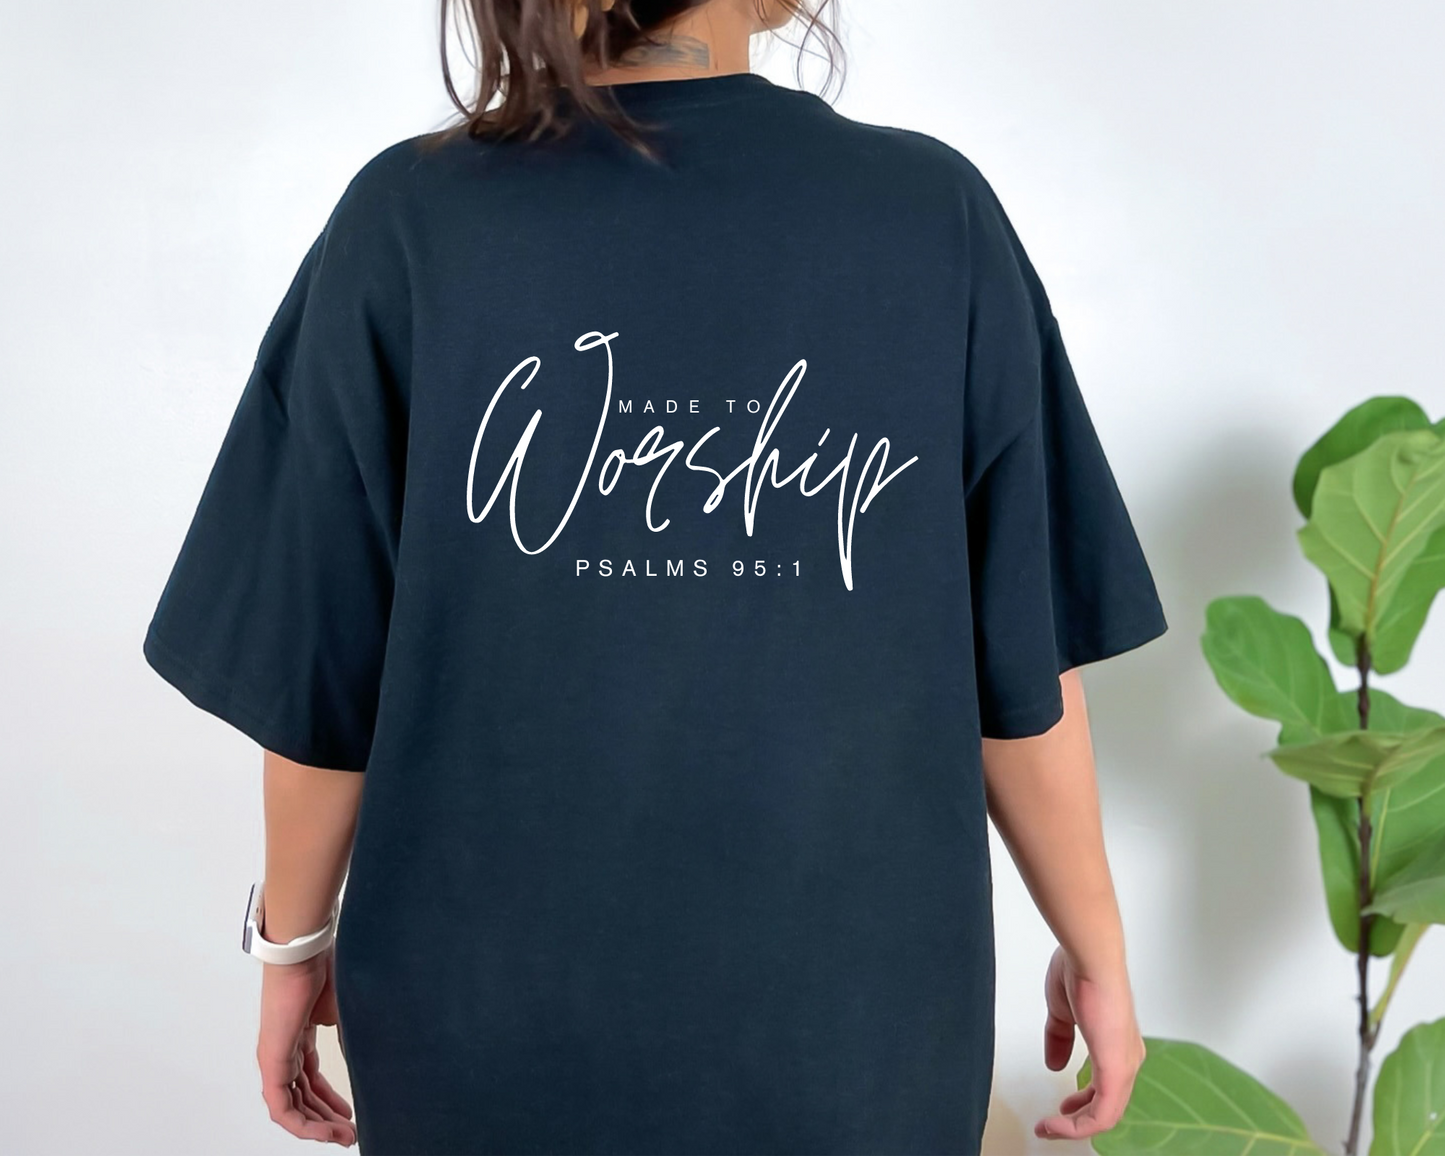 Warehouse Worship T-Shirt Pre-Order